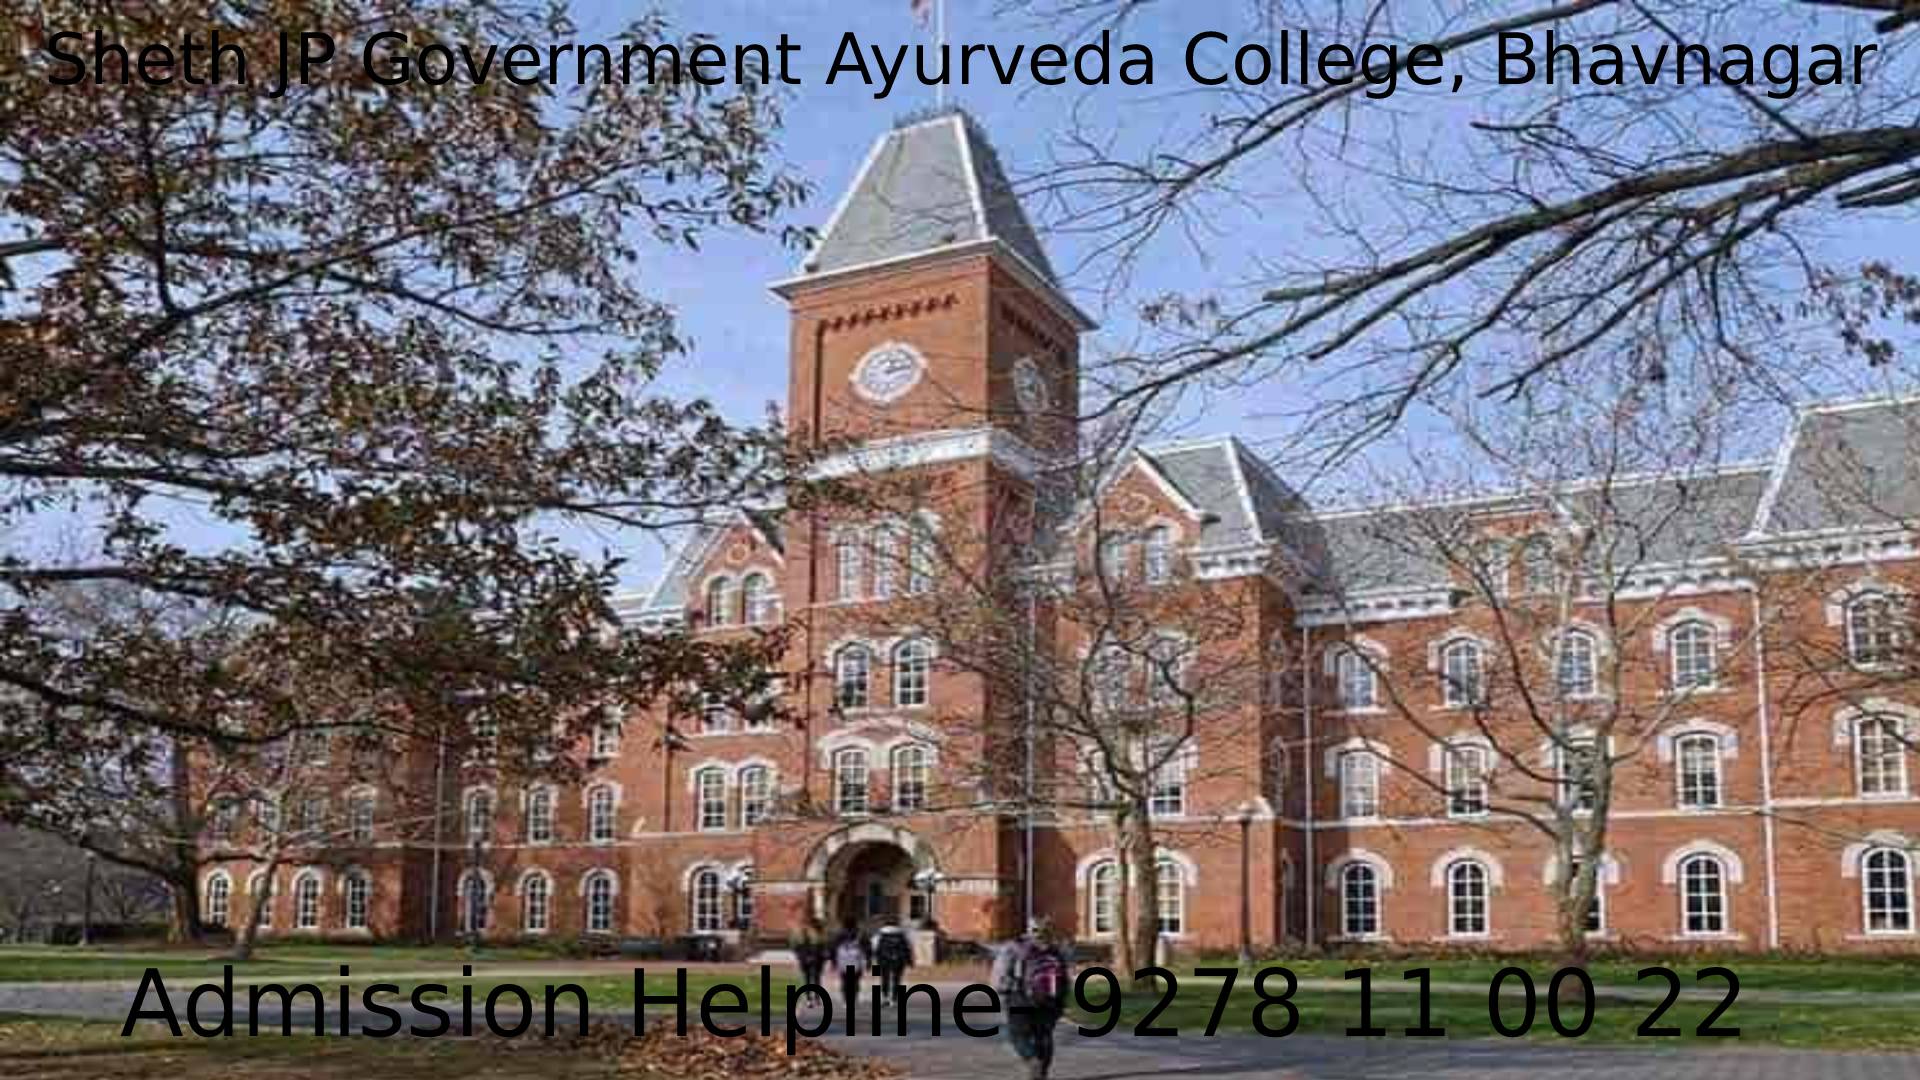 Sheth JP Government Ayurveda College, Bhavnagar